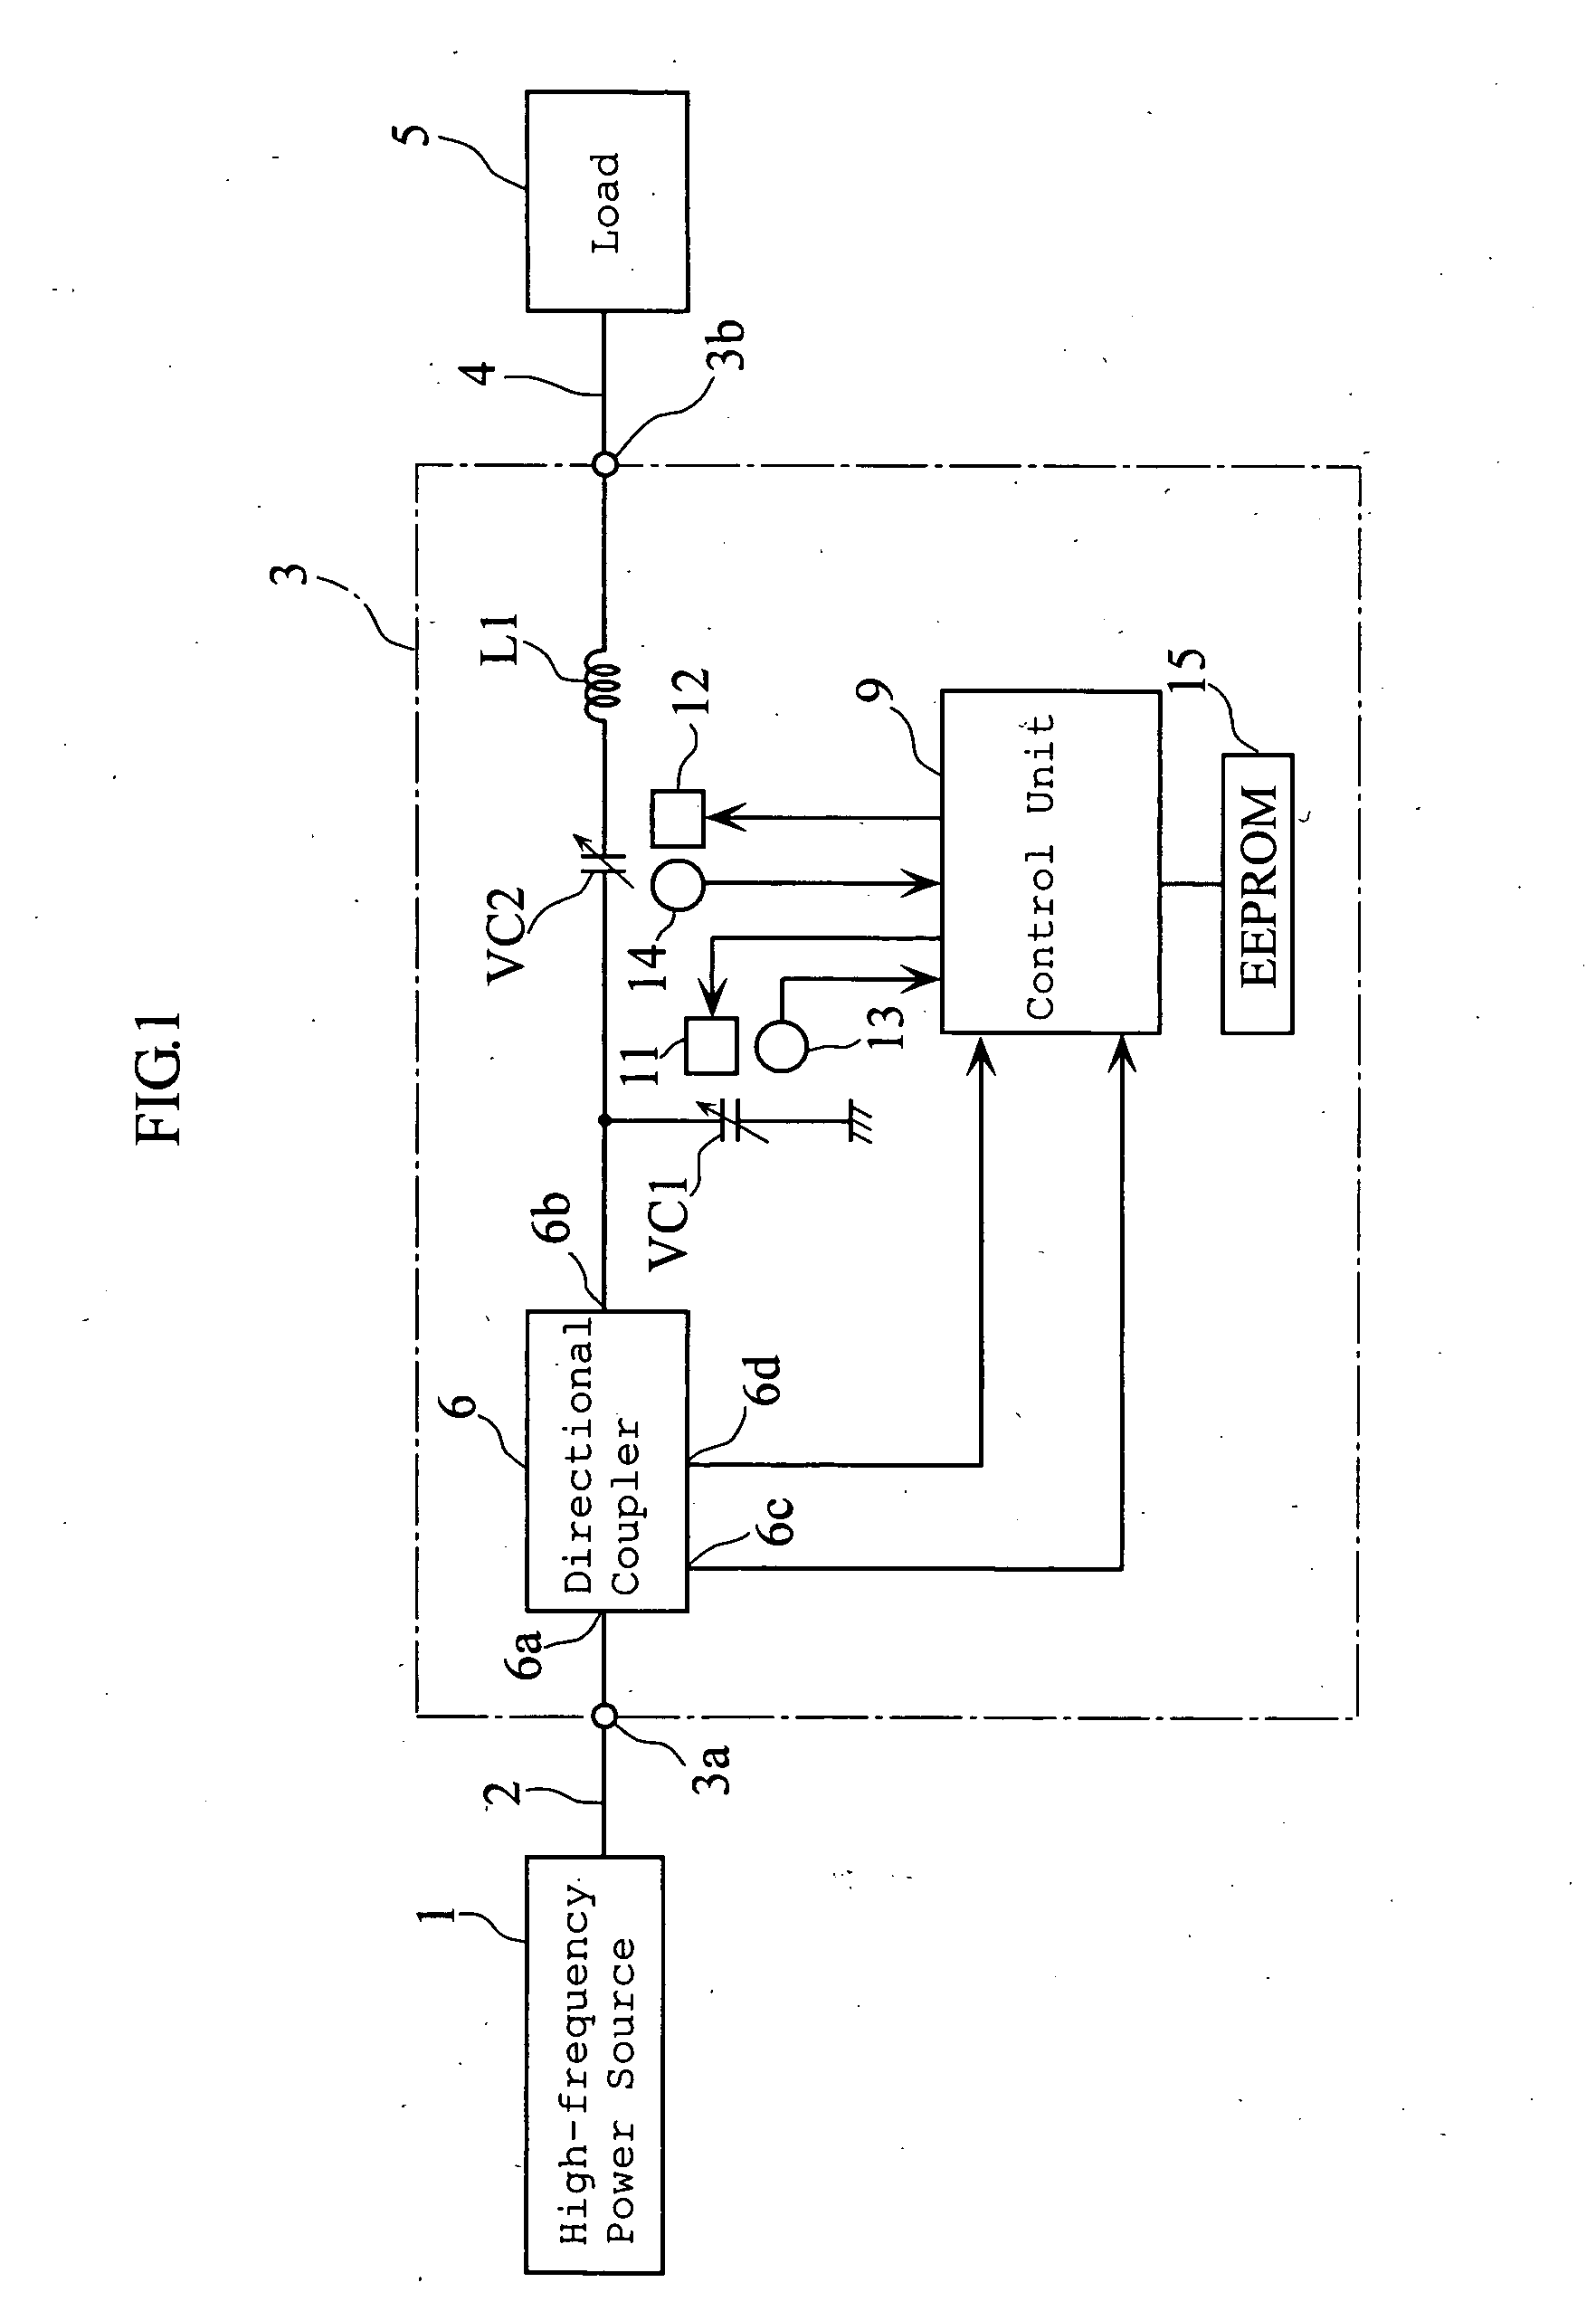 Impedance matching apparatus